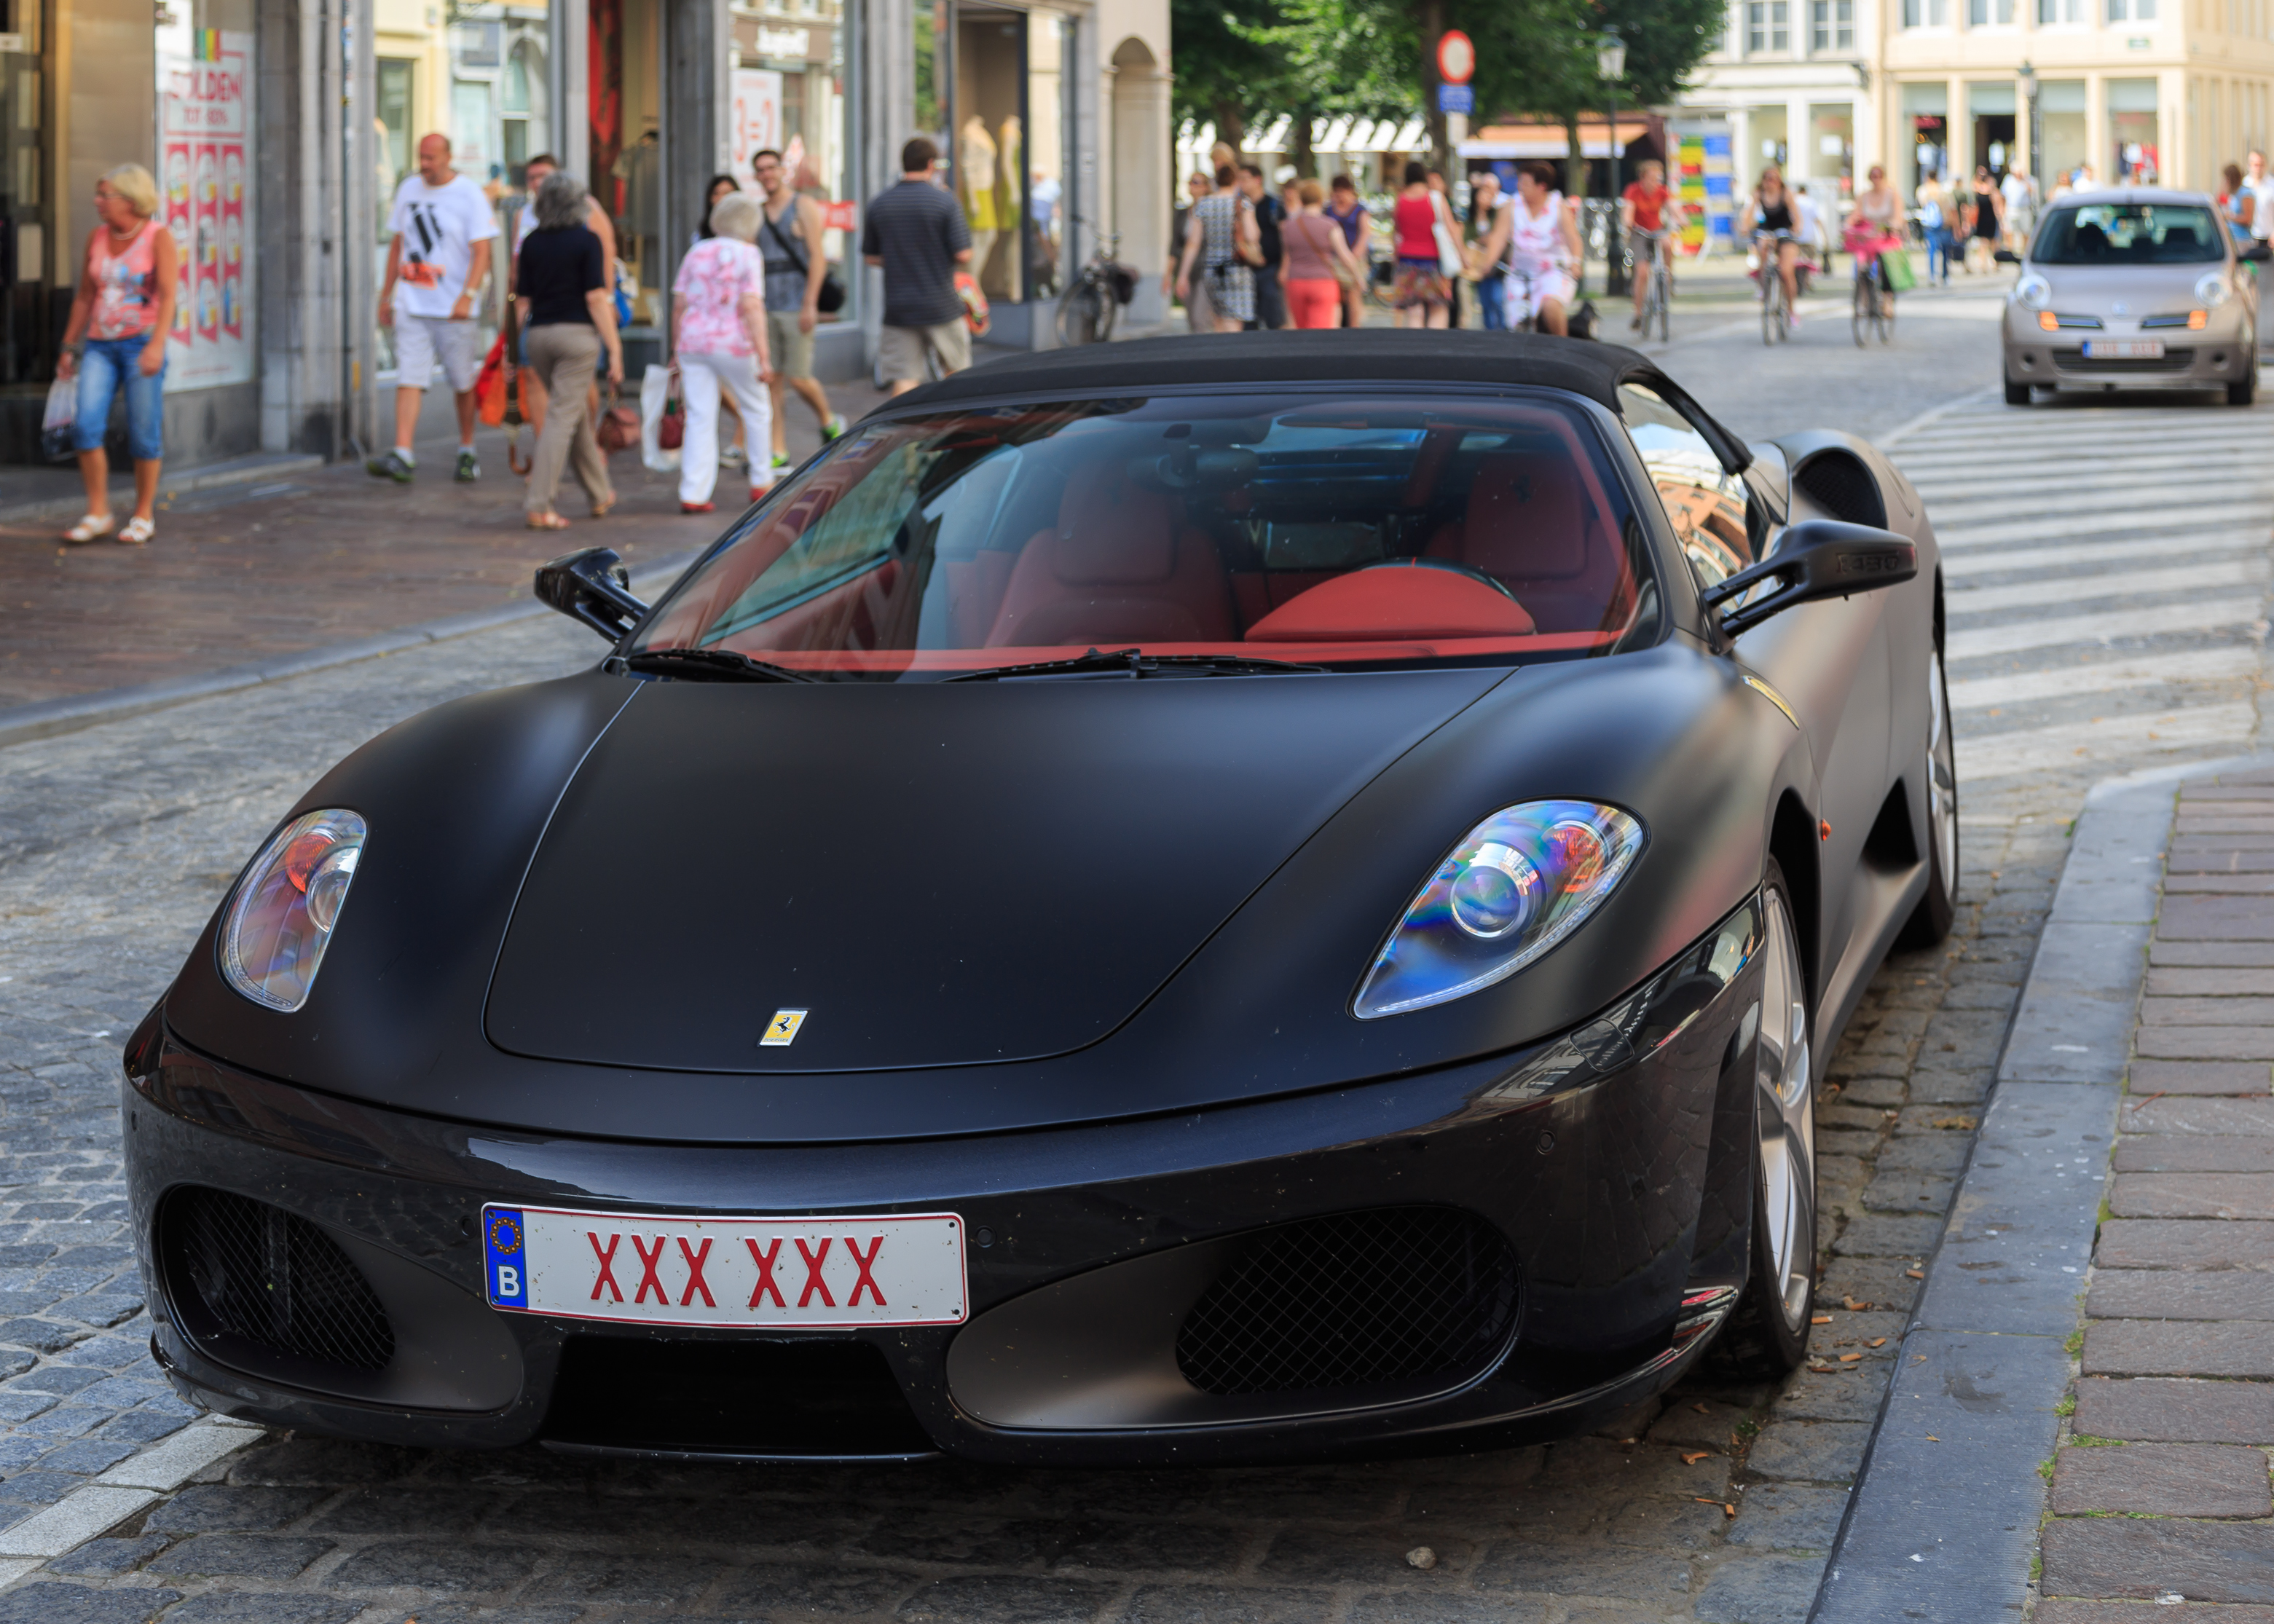 Bruges Belgium Ferrari-with-special-car-plate-XXXXXX-01